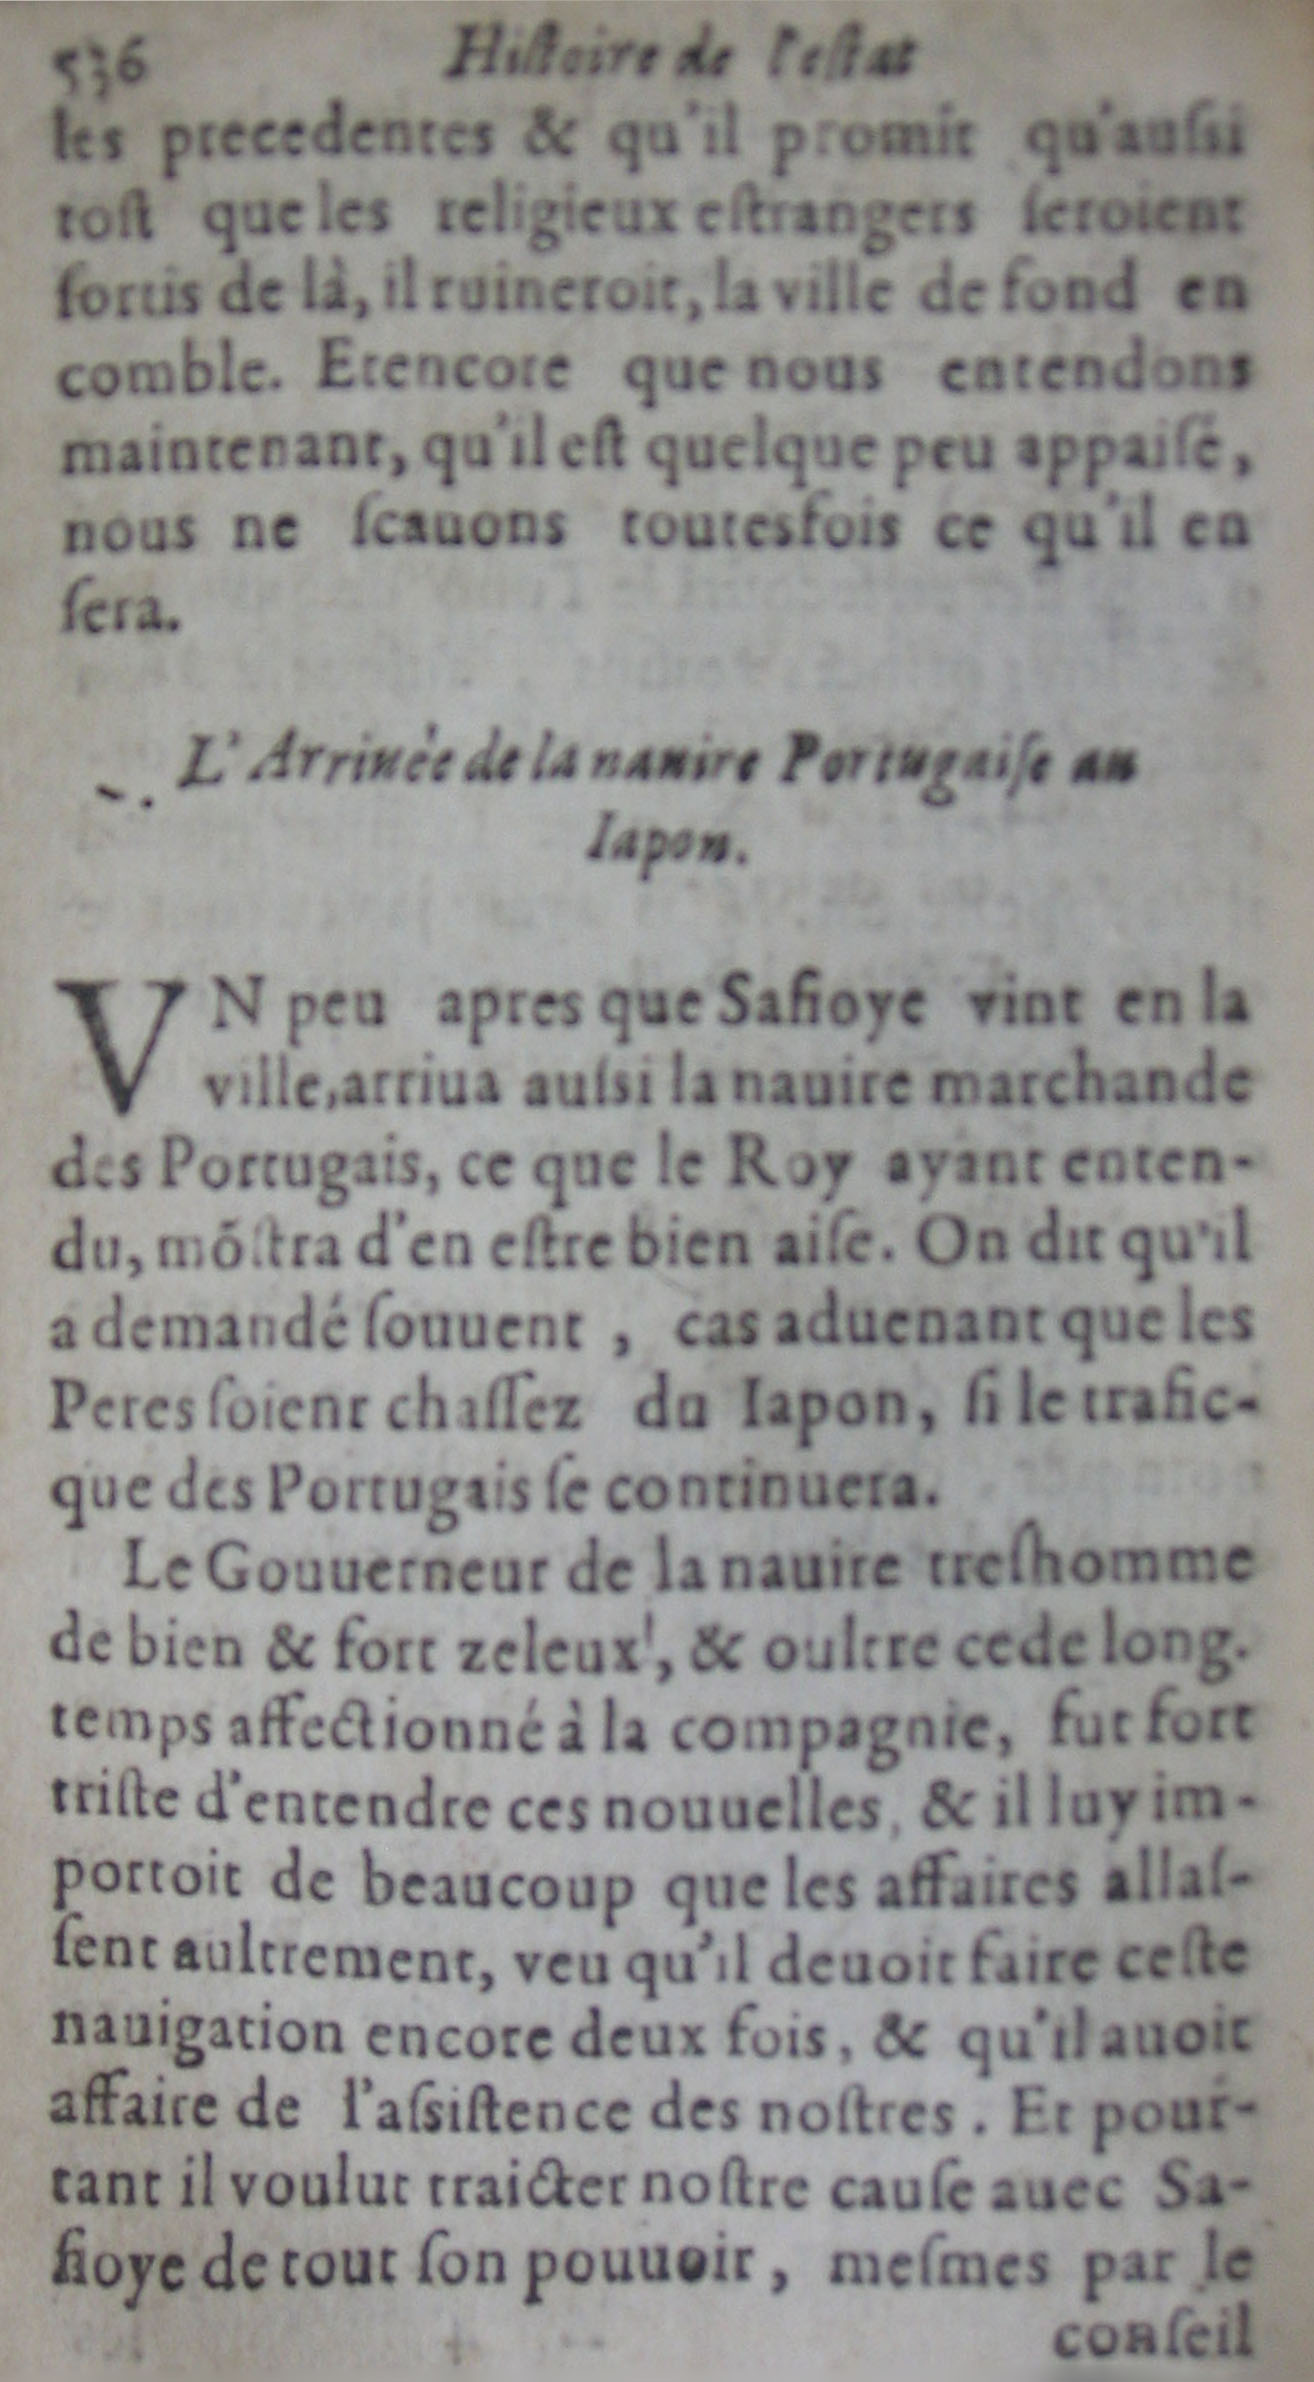 p. 536.JPG